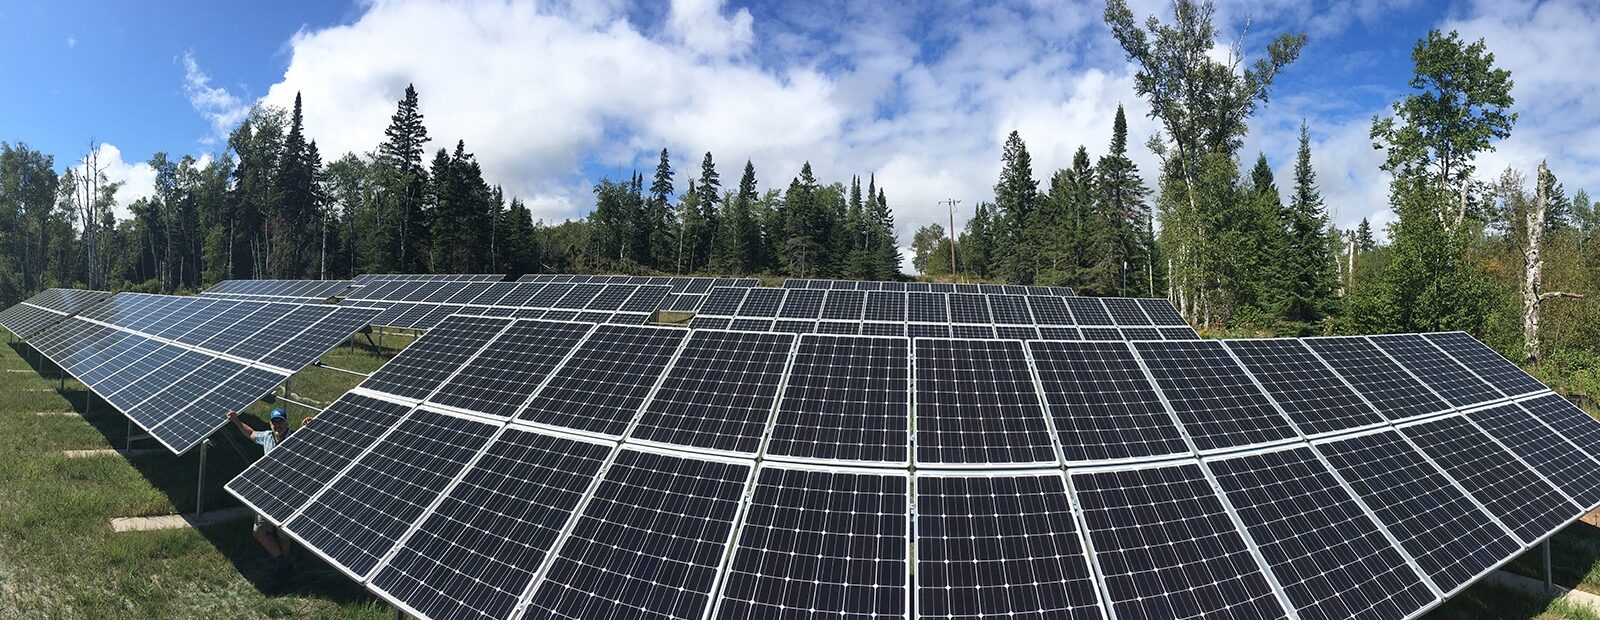 Utility Solar Panel Farm